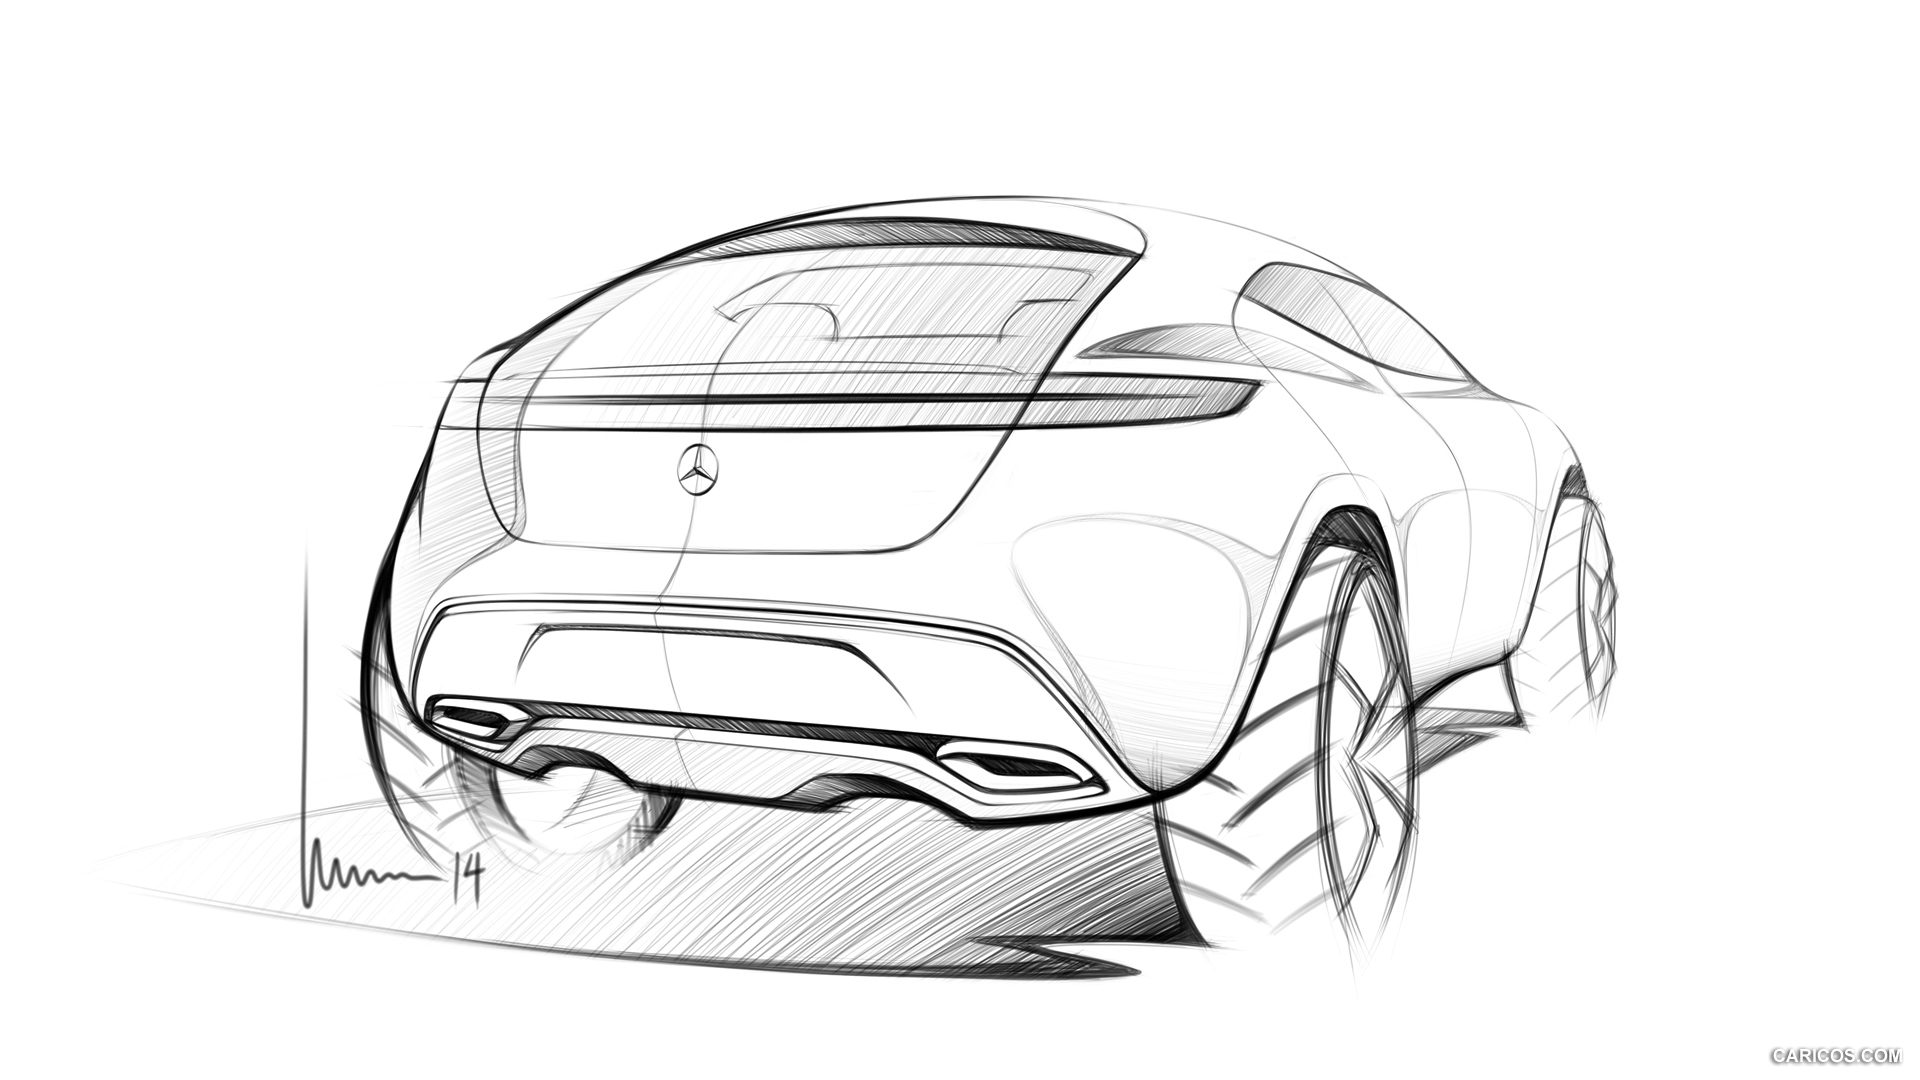 2014 Mercedes-Benz Vision G-Code SUC Concept  - Design Sketch, #18 of 19